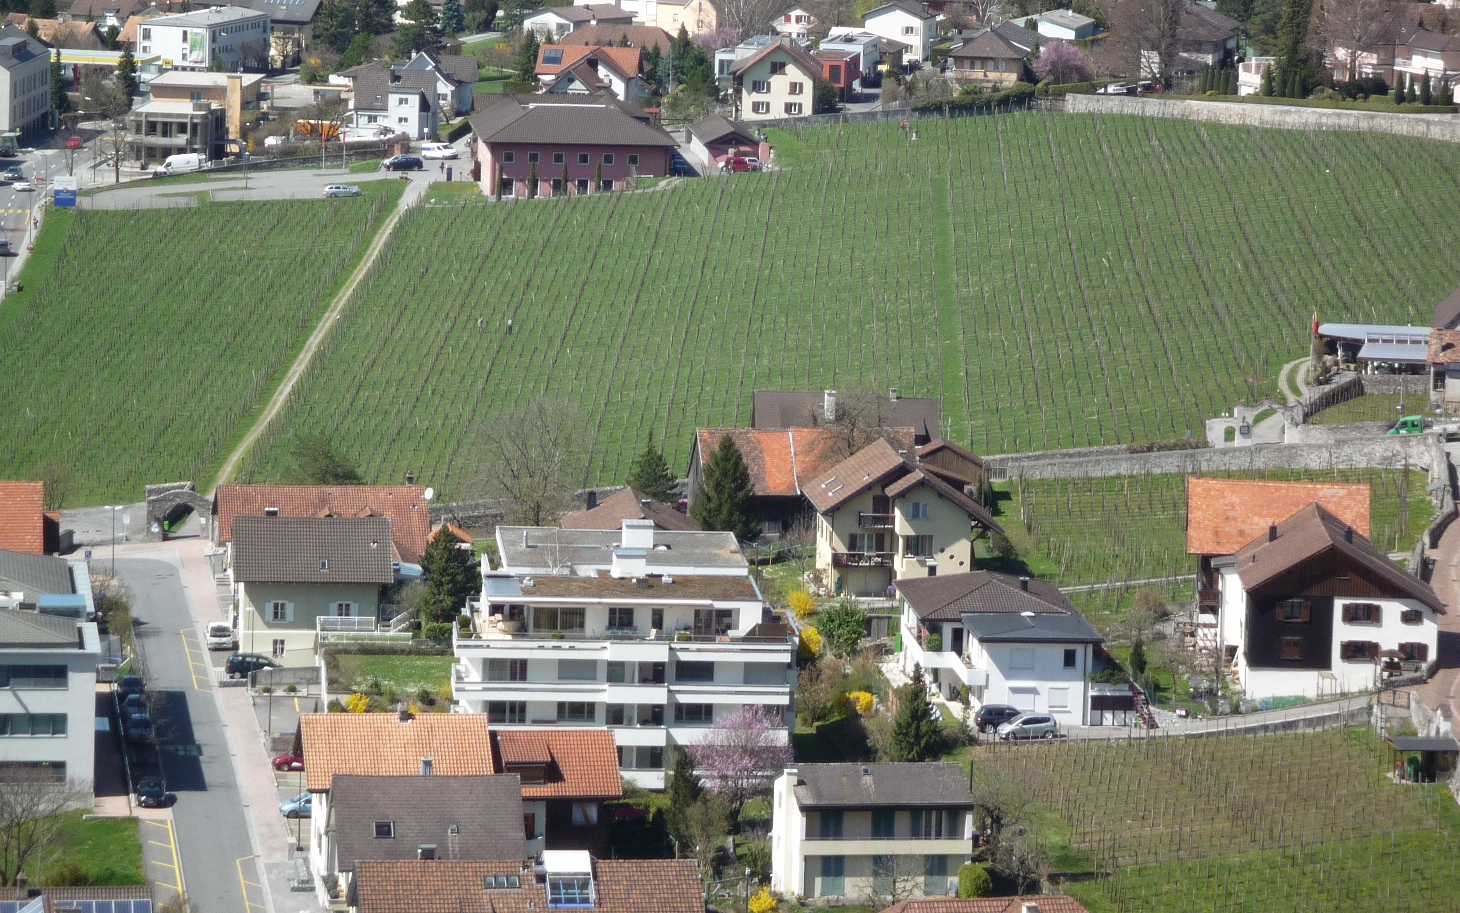 The Herawingert - the largest vineyard in Liechtenstein.